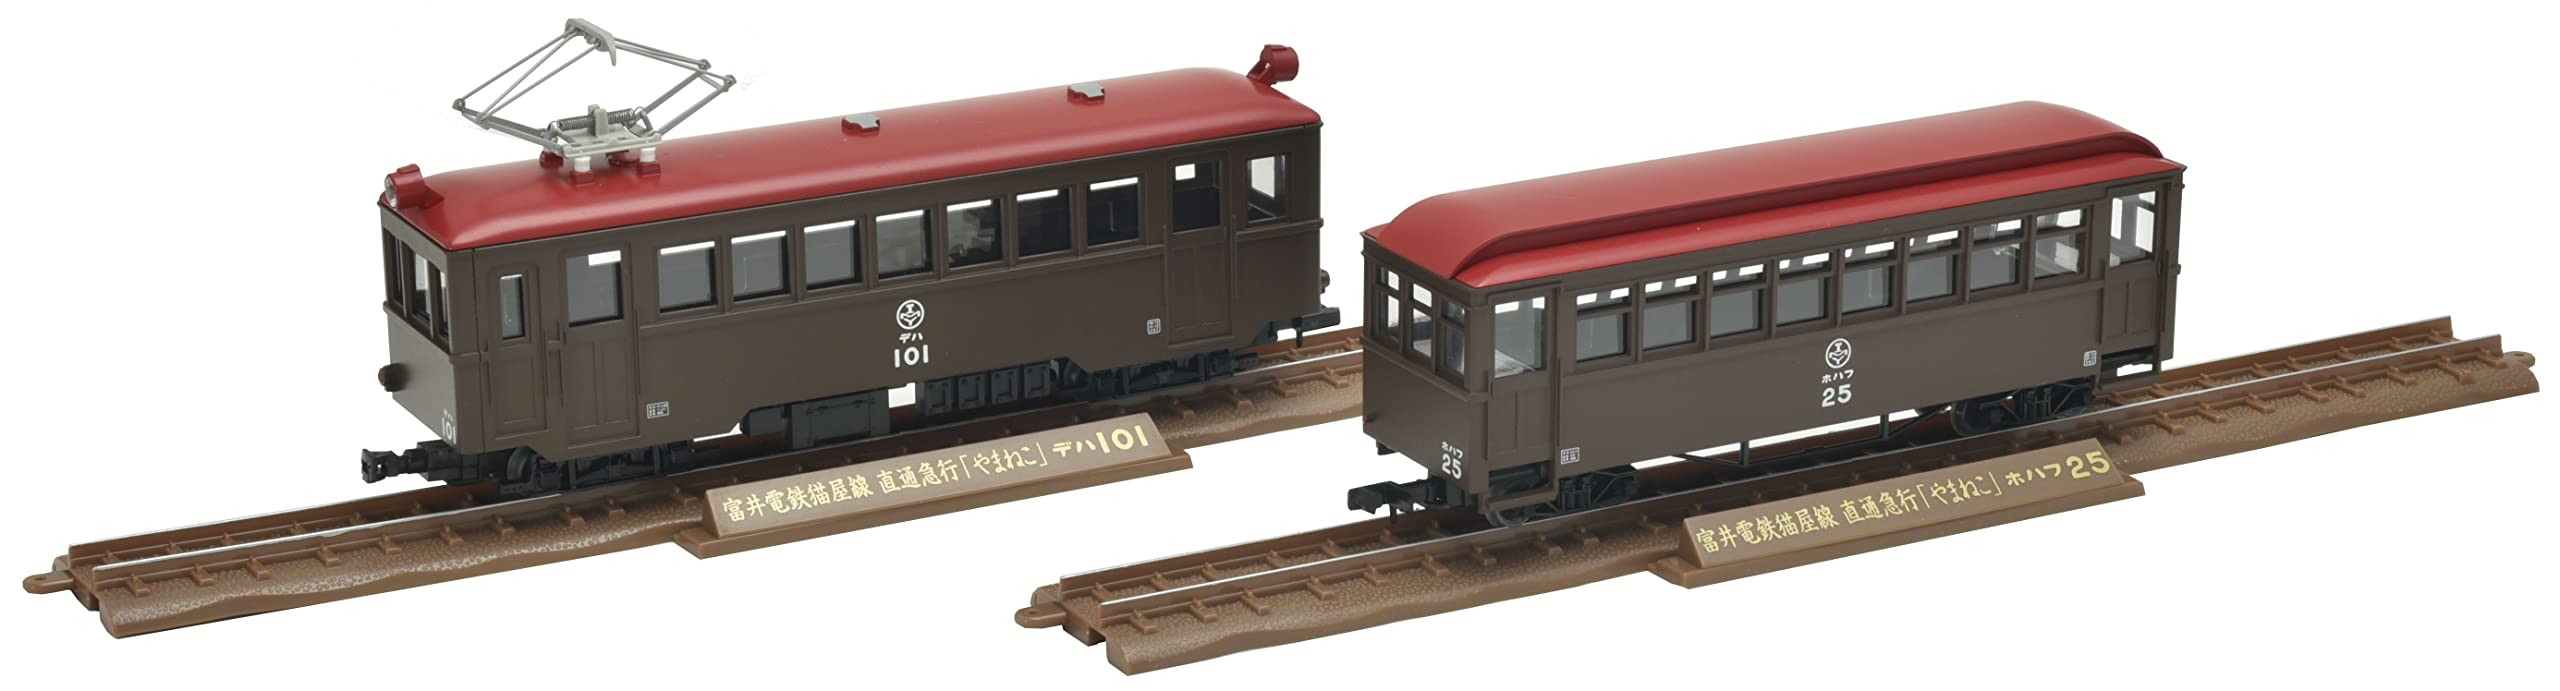 Tomytec Japan Railway Collection Iron Collection Narrow Gauge 80 Nekoya Line Yamaneko Deha 101 + Hohafu 25 2 Car Set Diorama 315490